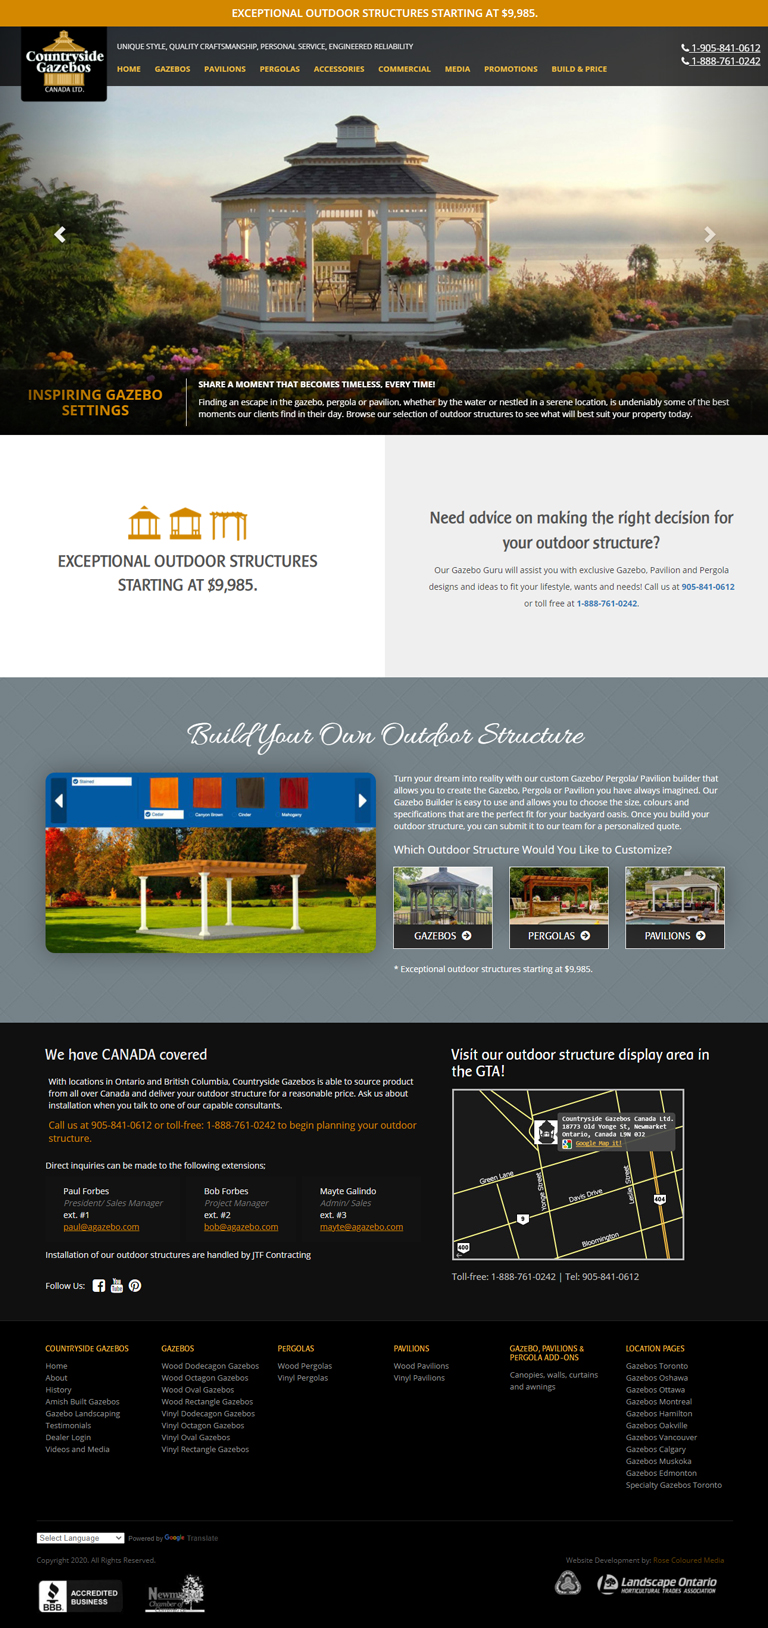 Countryside Gazebos Website Design